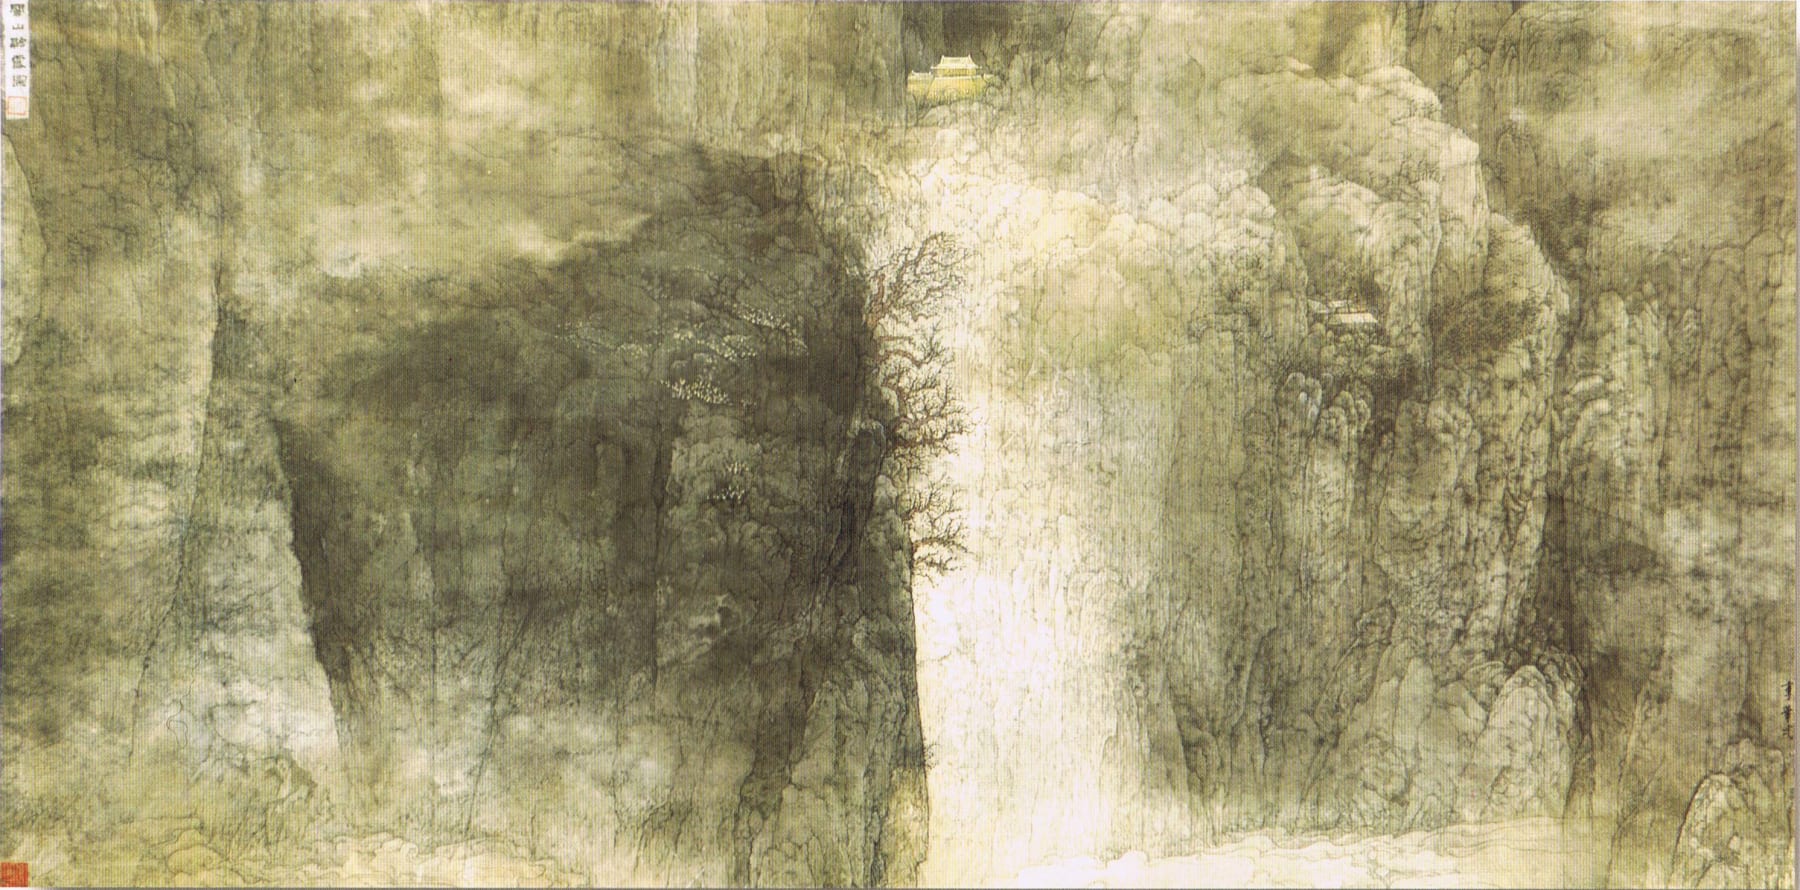 Li Huayi 李華弌, Snowy Mountain 《關山融雪圖》, 1997